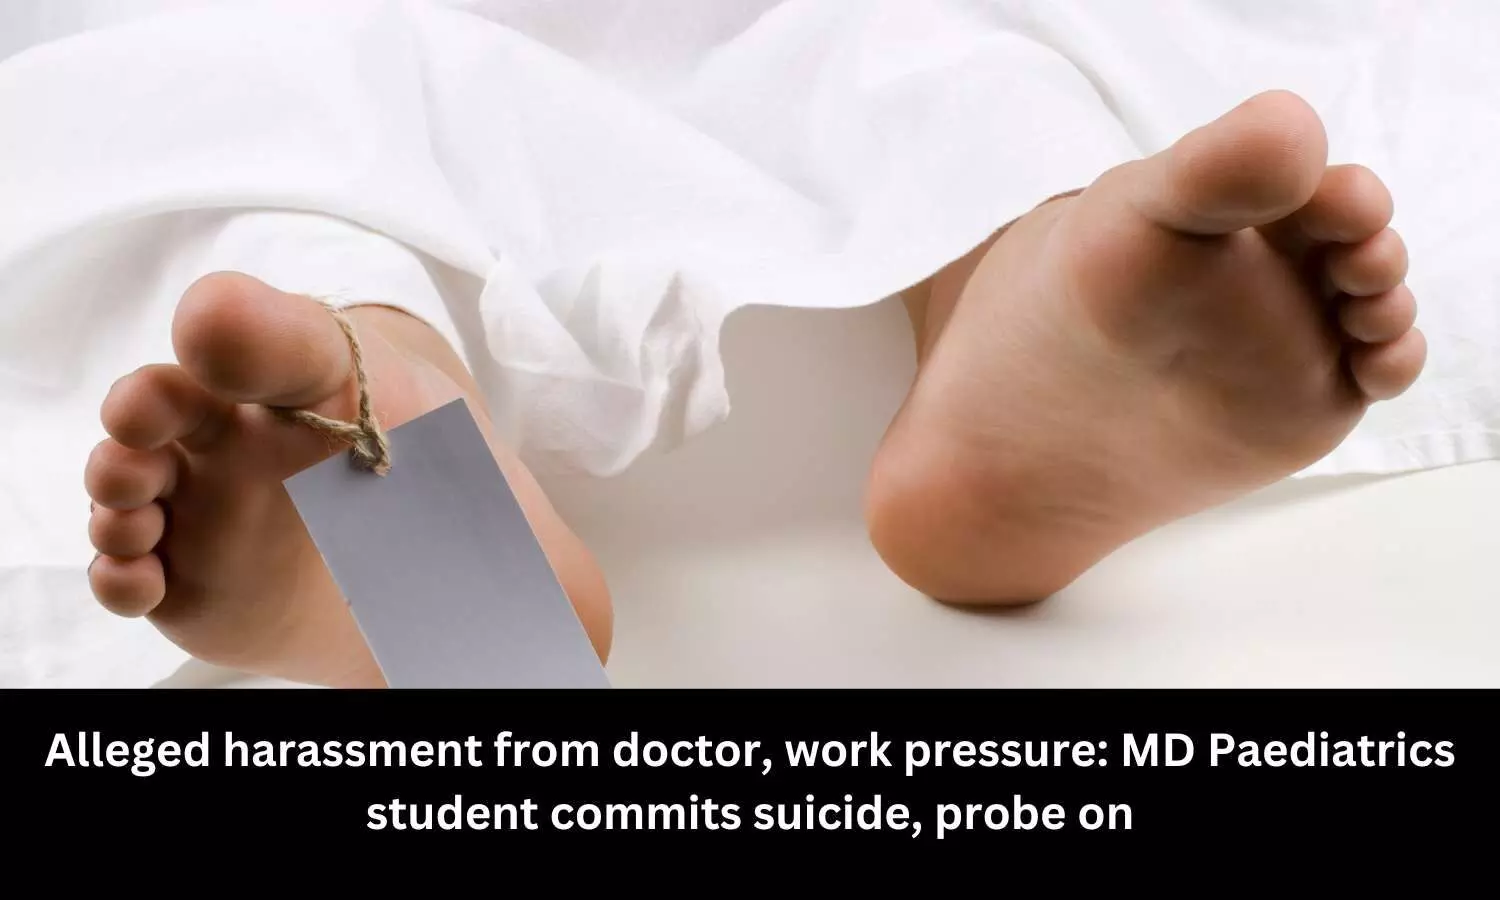 MD Paediatrics student commits suicide